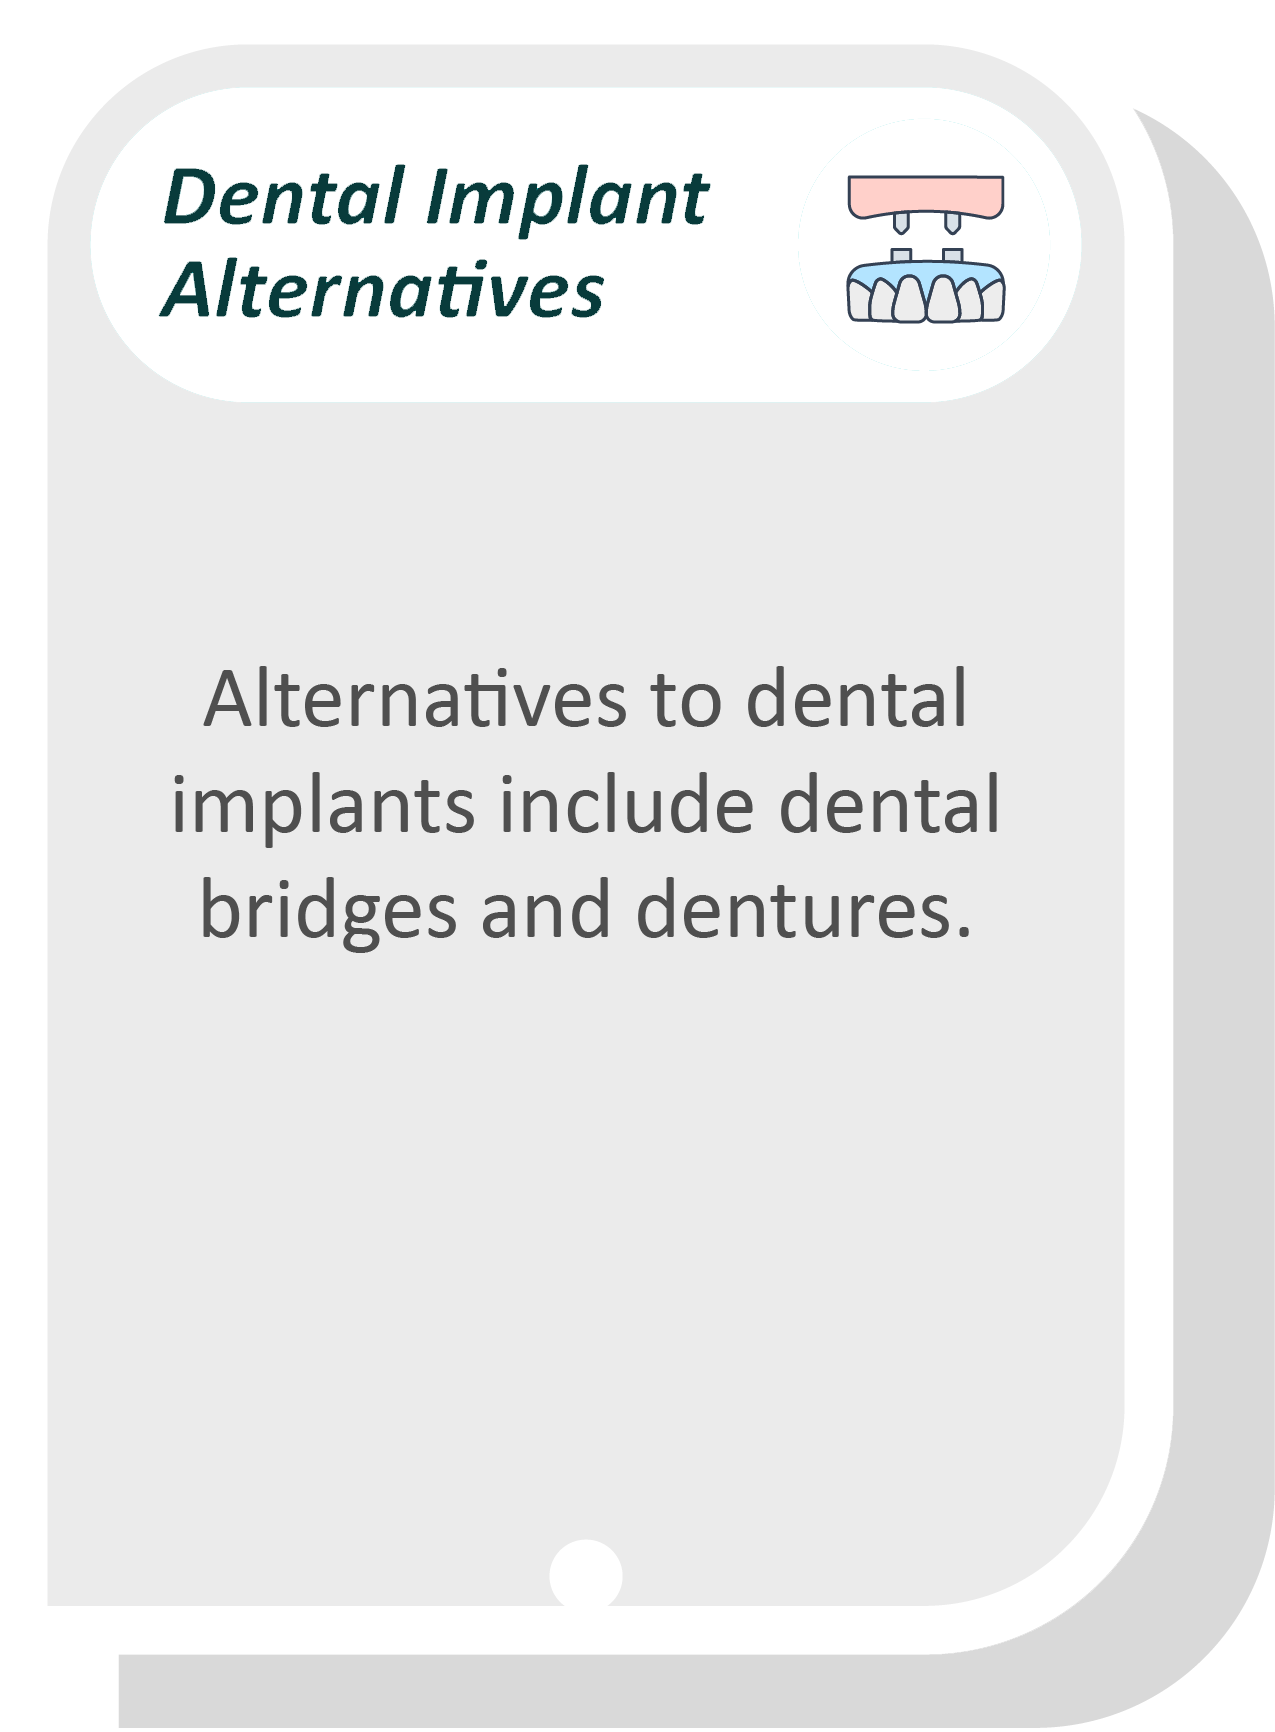 Dental implants infographic: Alternatives to dental implants include dental bridges and dentures.